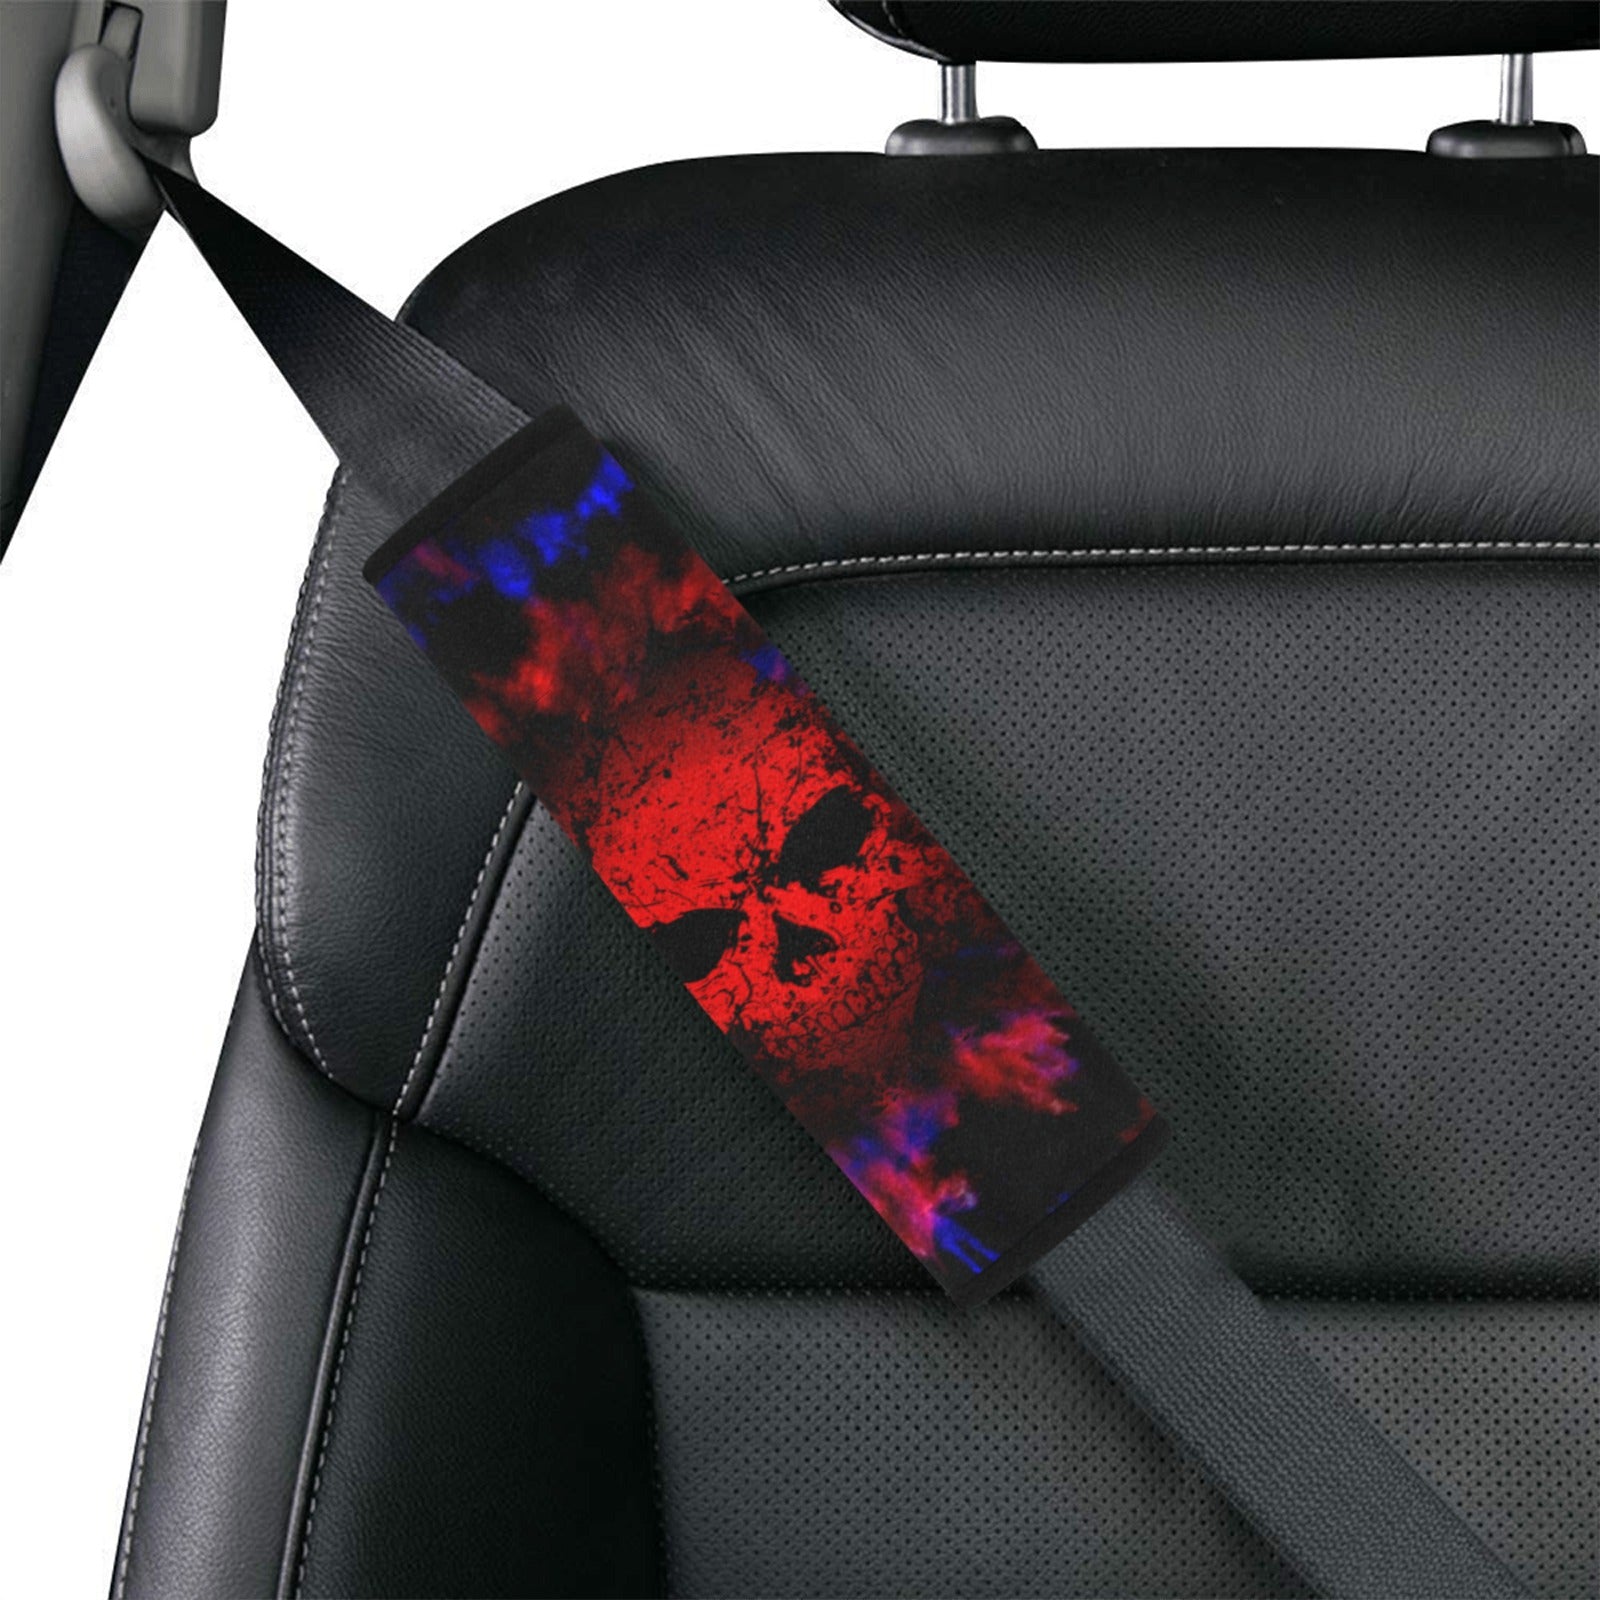 Crimson Chaos Seat Belt Cover 7" x 12.6"